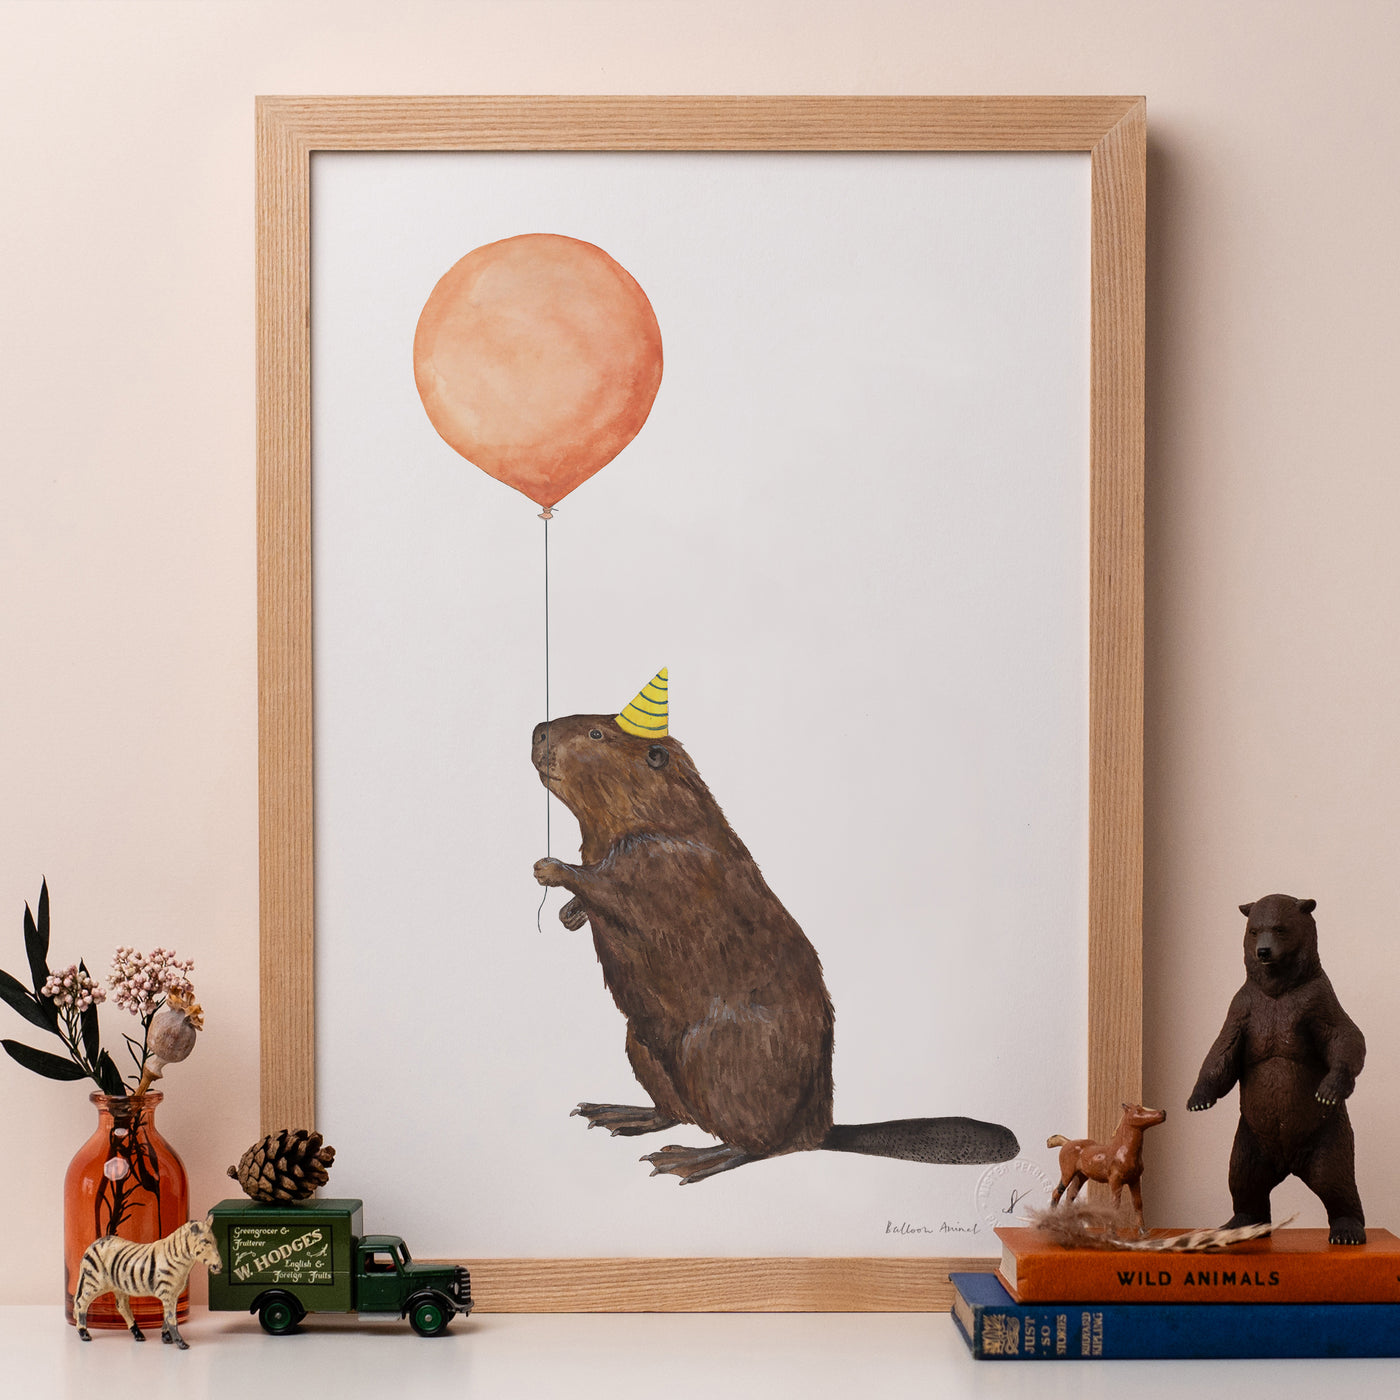 Balloon Animal Print - Beaver